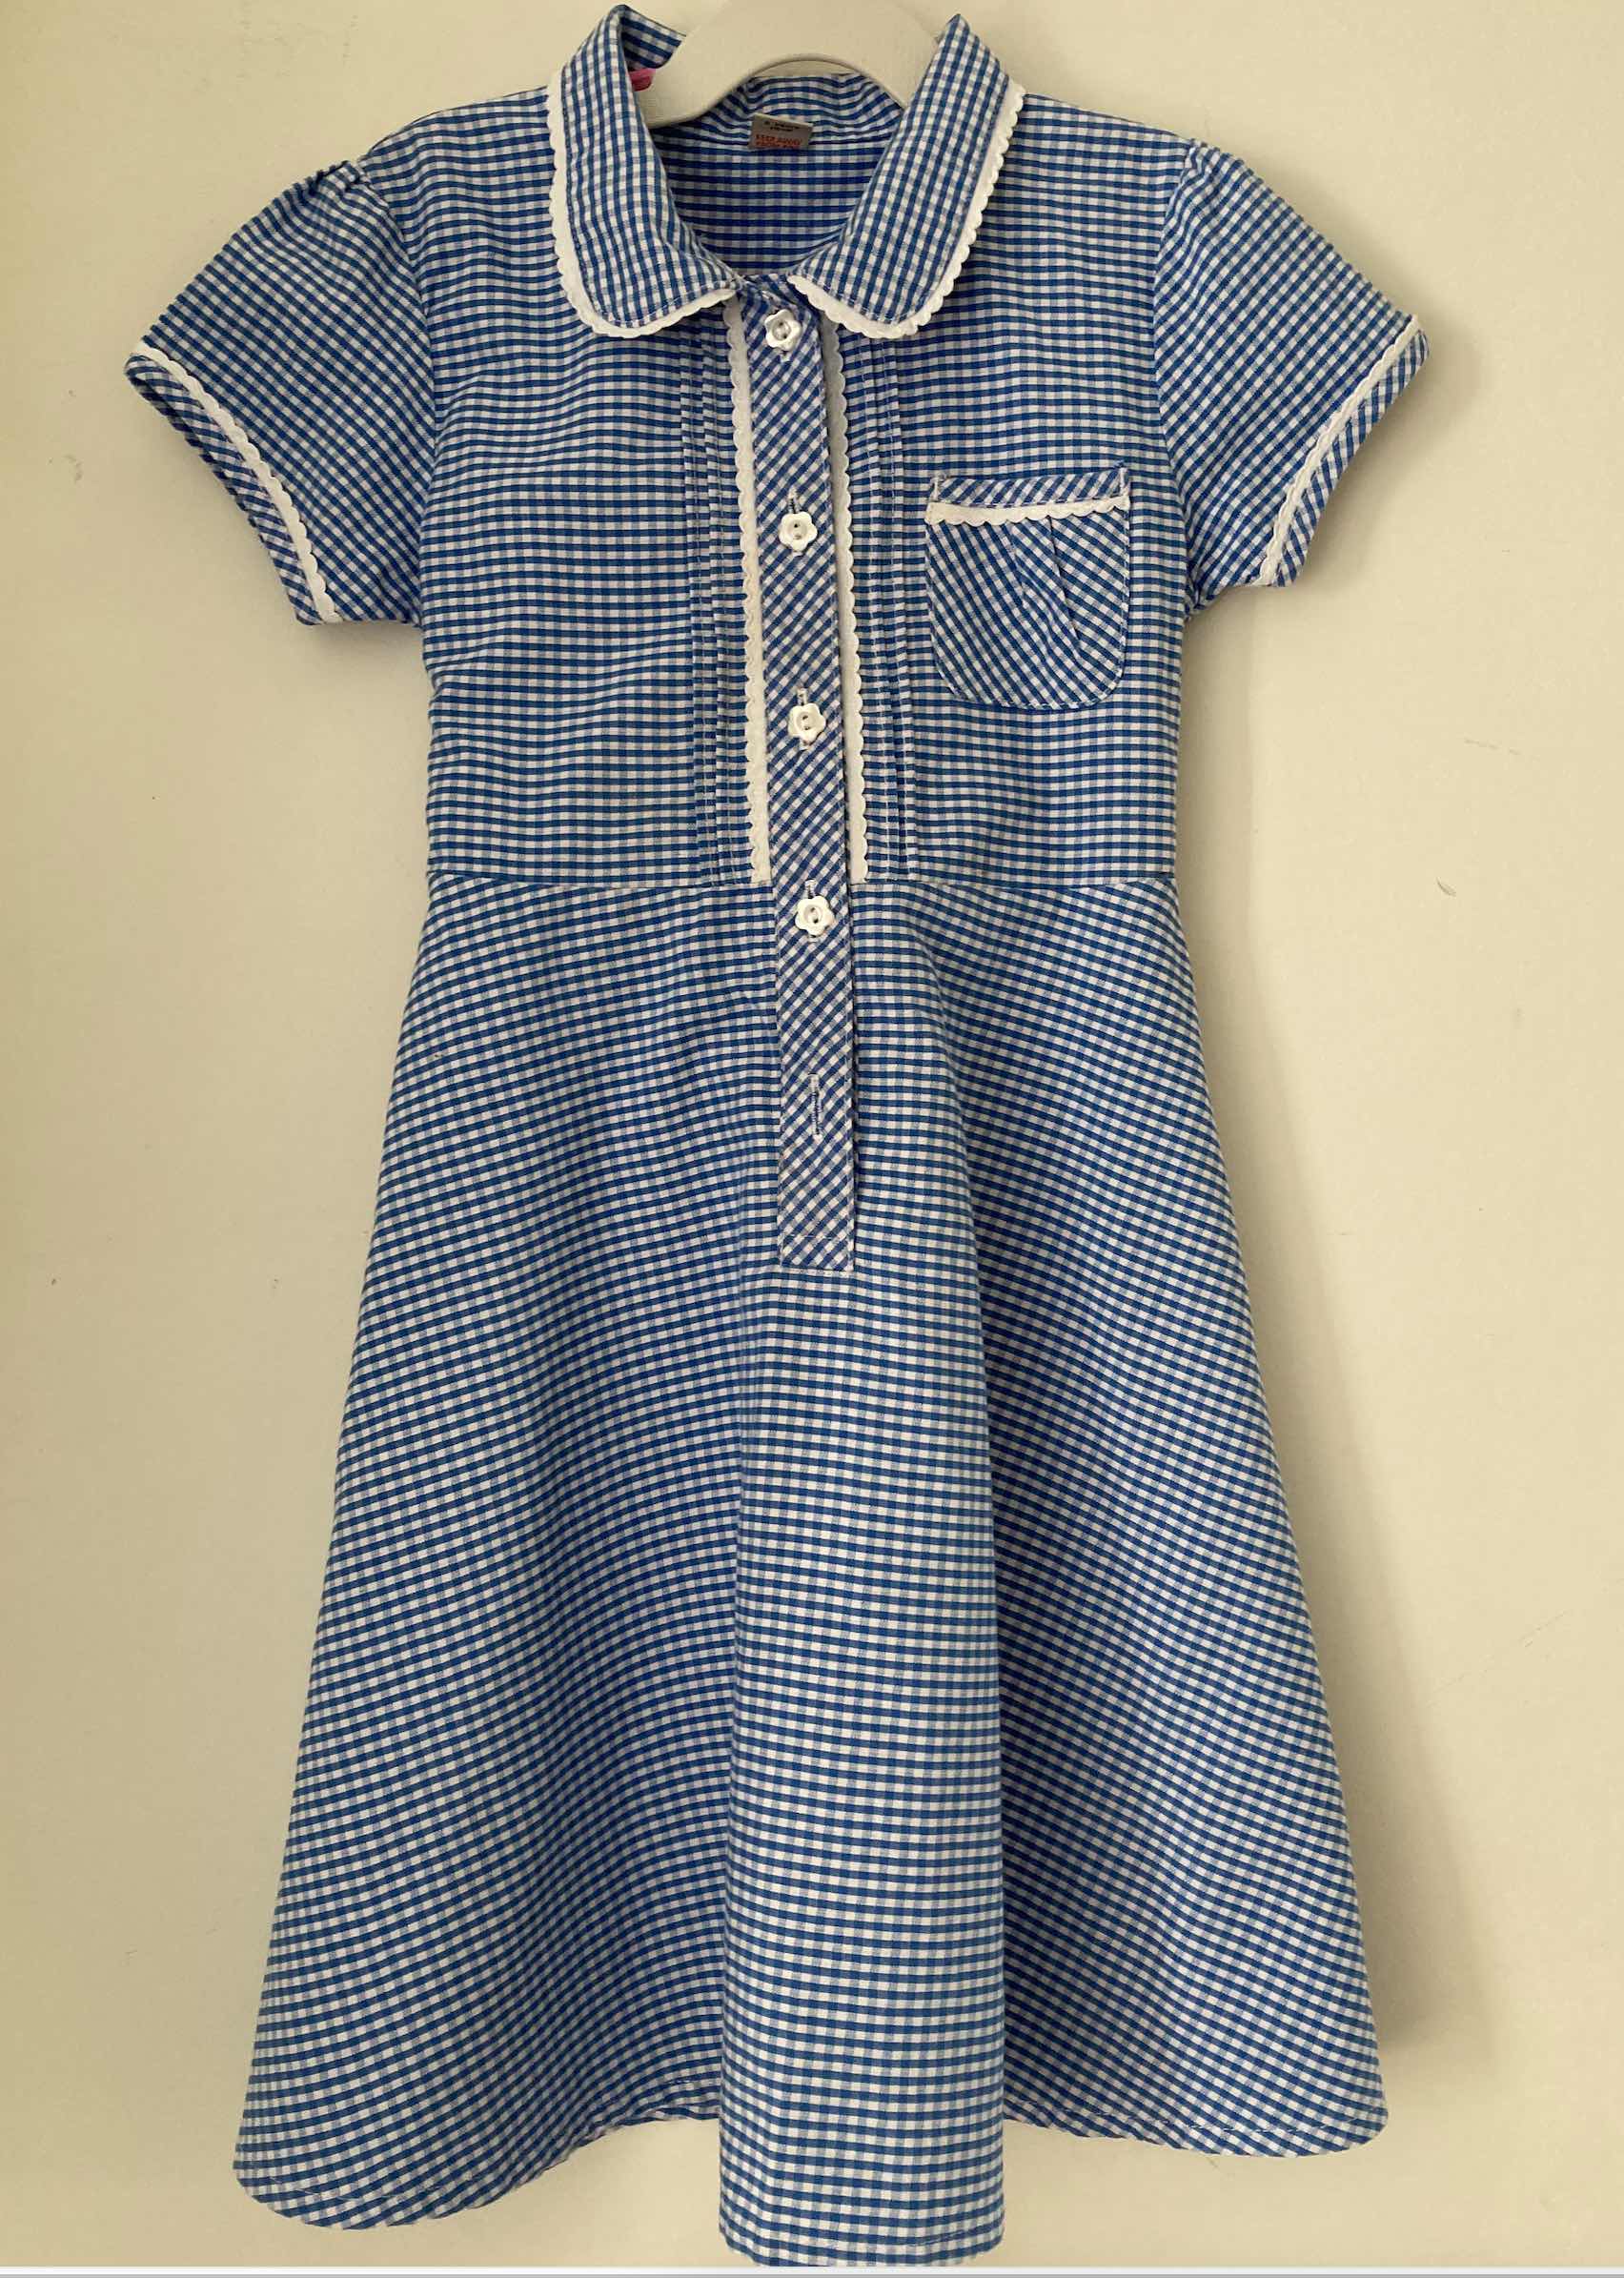 Girls' Blue Gingham Summer Dress, Button Front, Frilled Placket, Breast Pocket, A-line Skirt, Tied Back 3-4 Y